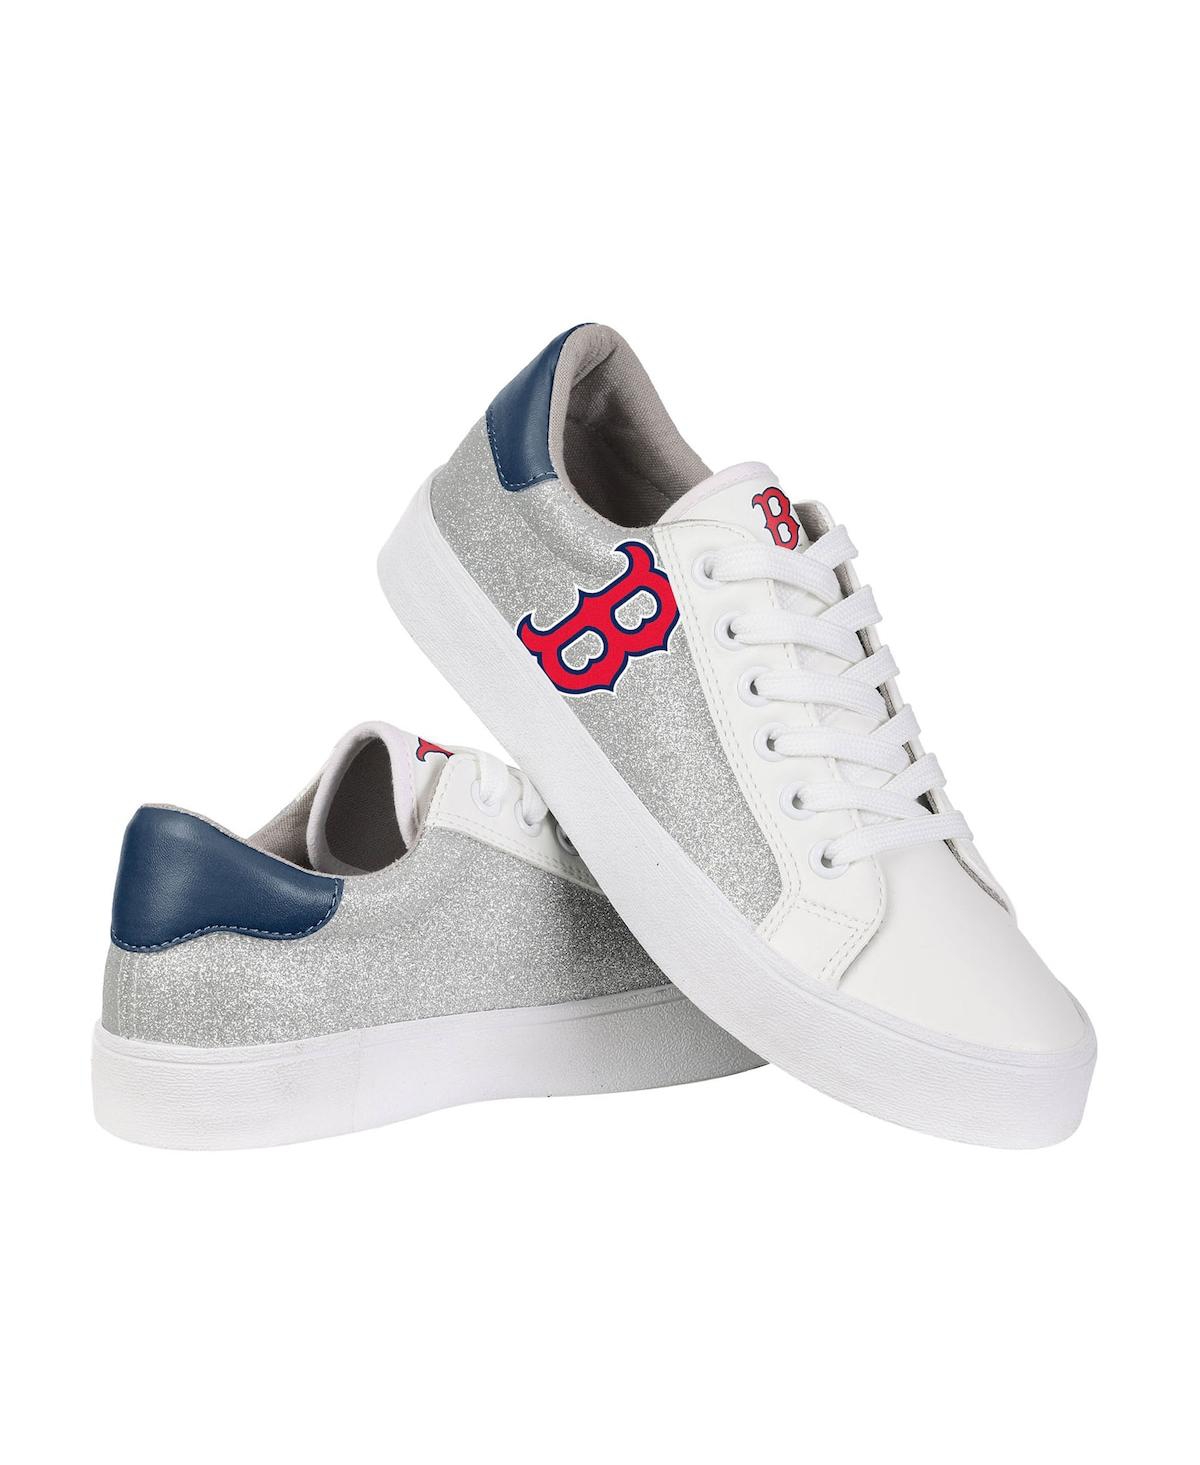 Women's Foco Boston Red Sox Glitter Sneakers - White